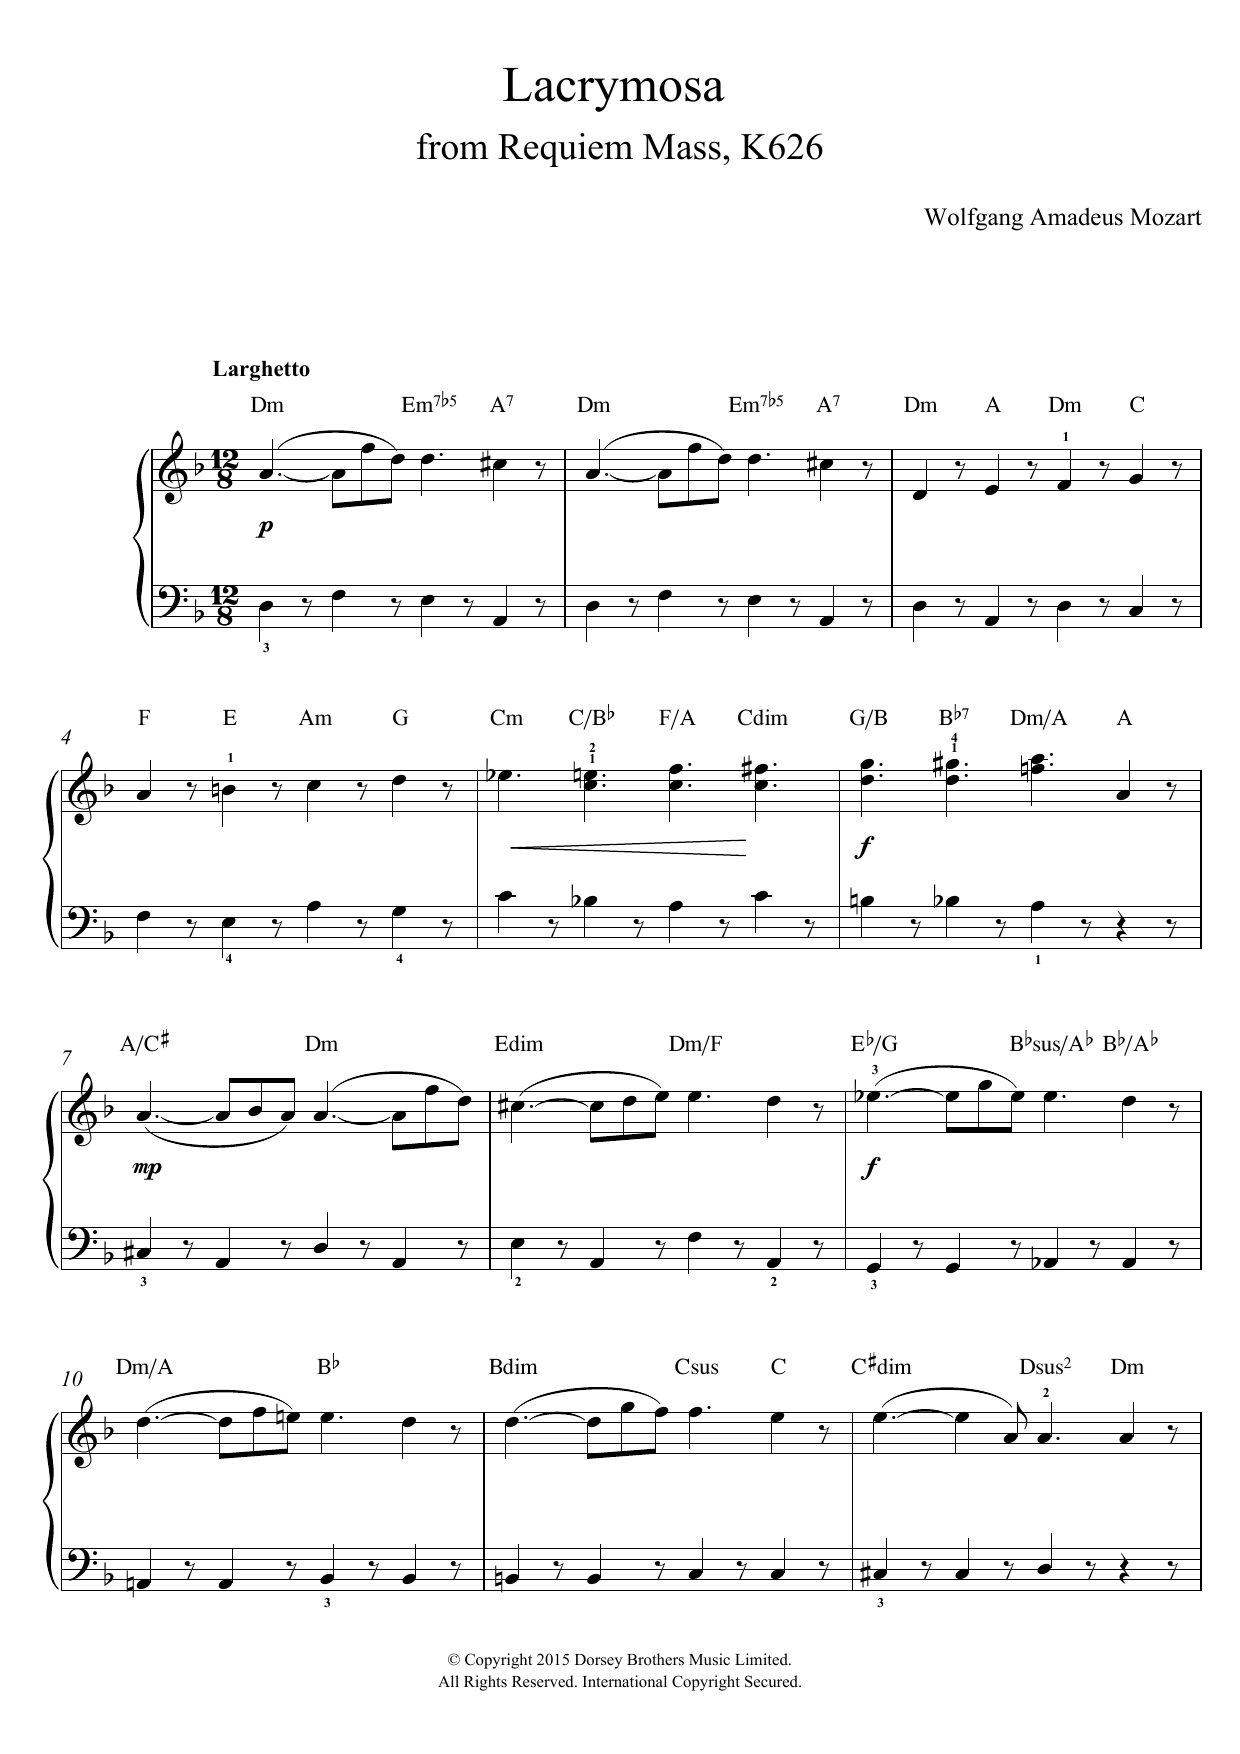 Download Wolfgang Amadeus Mozart Lacrymosa from Requiem Mass, K626 Sheet Music